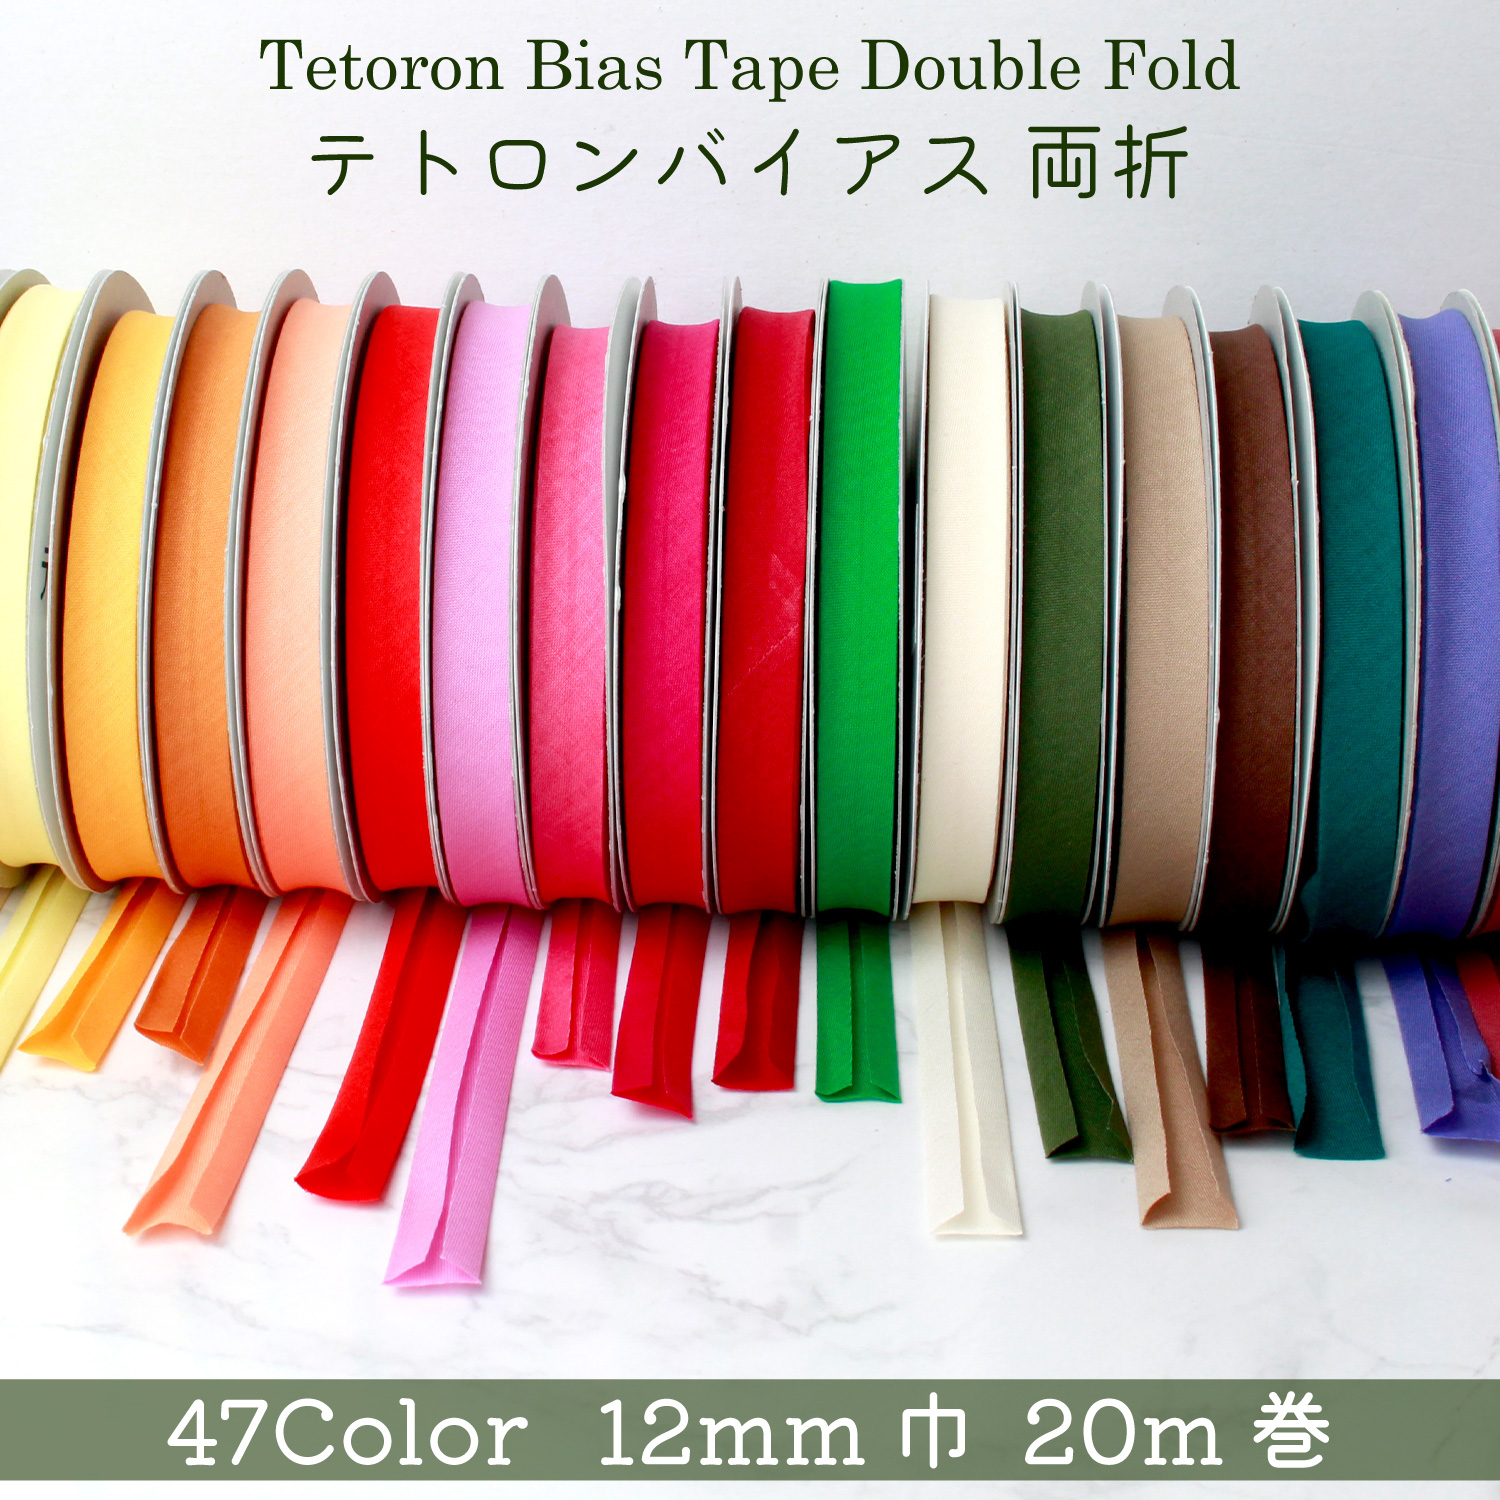 Tetoron Bias Tape Double Fold 12mm 20m (roll)